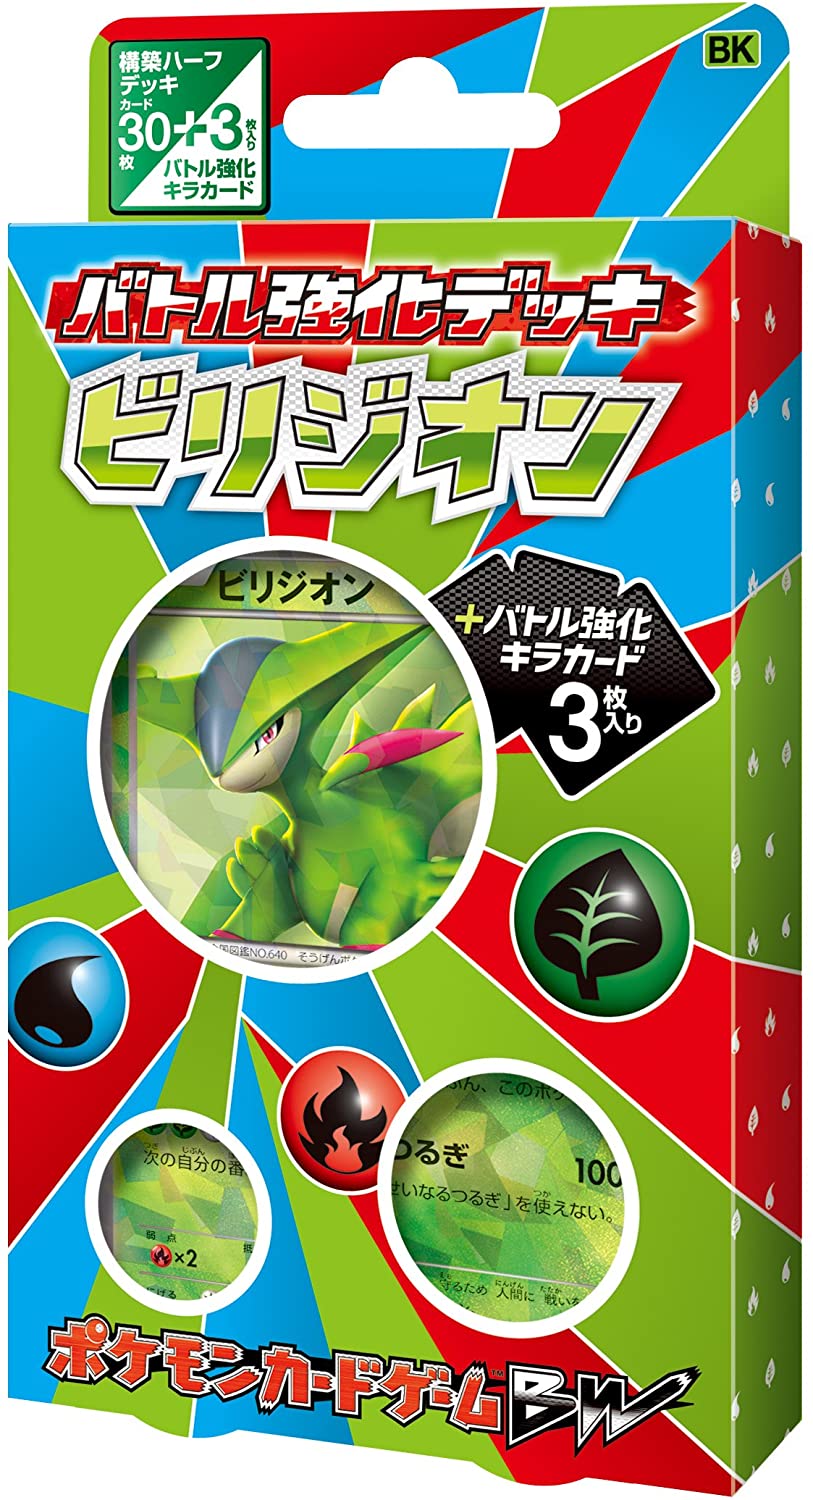 Pokemon Trading Card Game - BW - Battle Enhancement Deck - Virizion - Japanese Ver. (Pokemon)